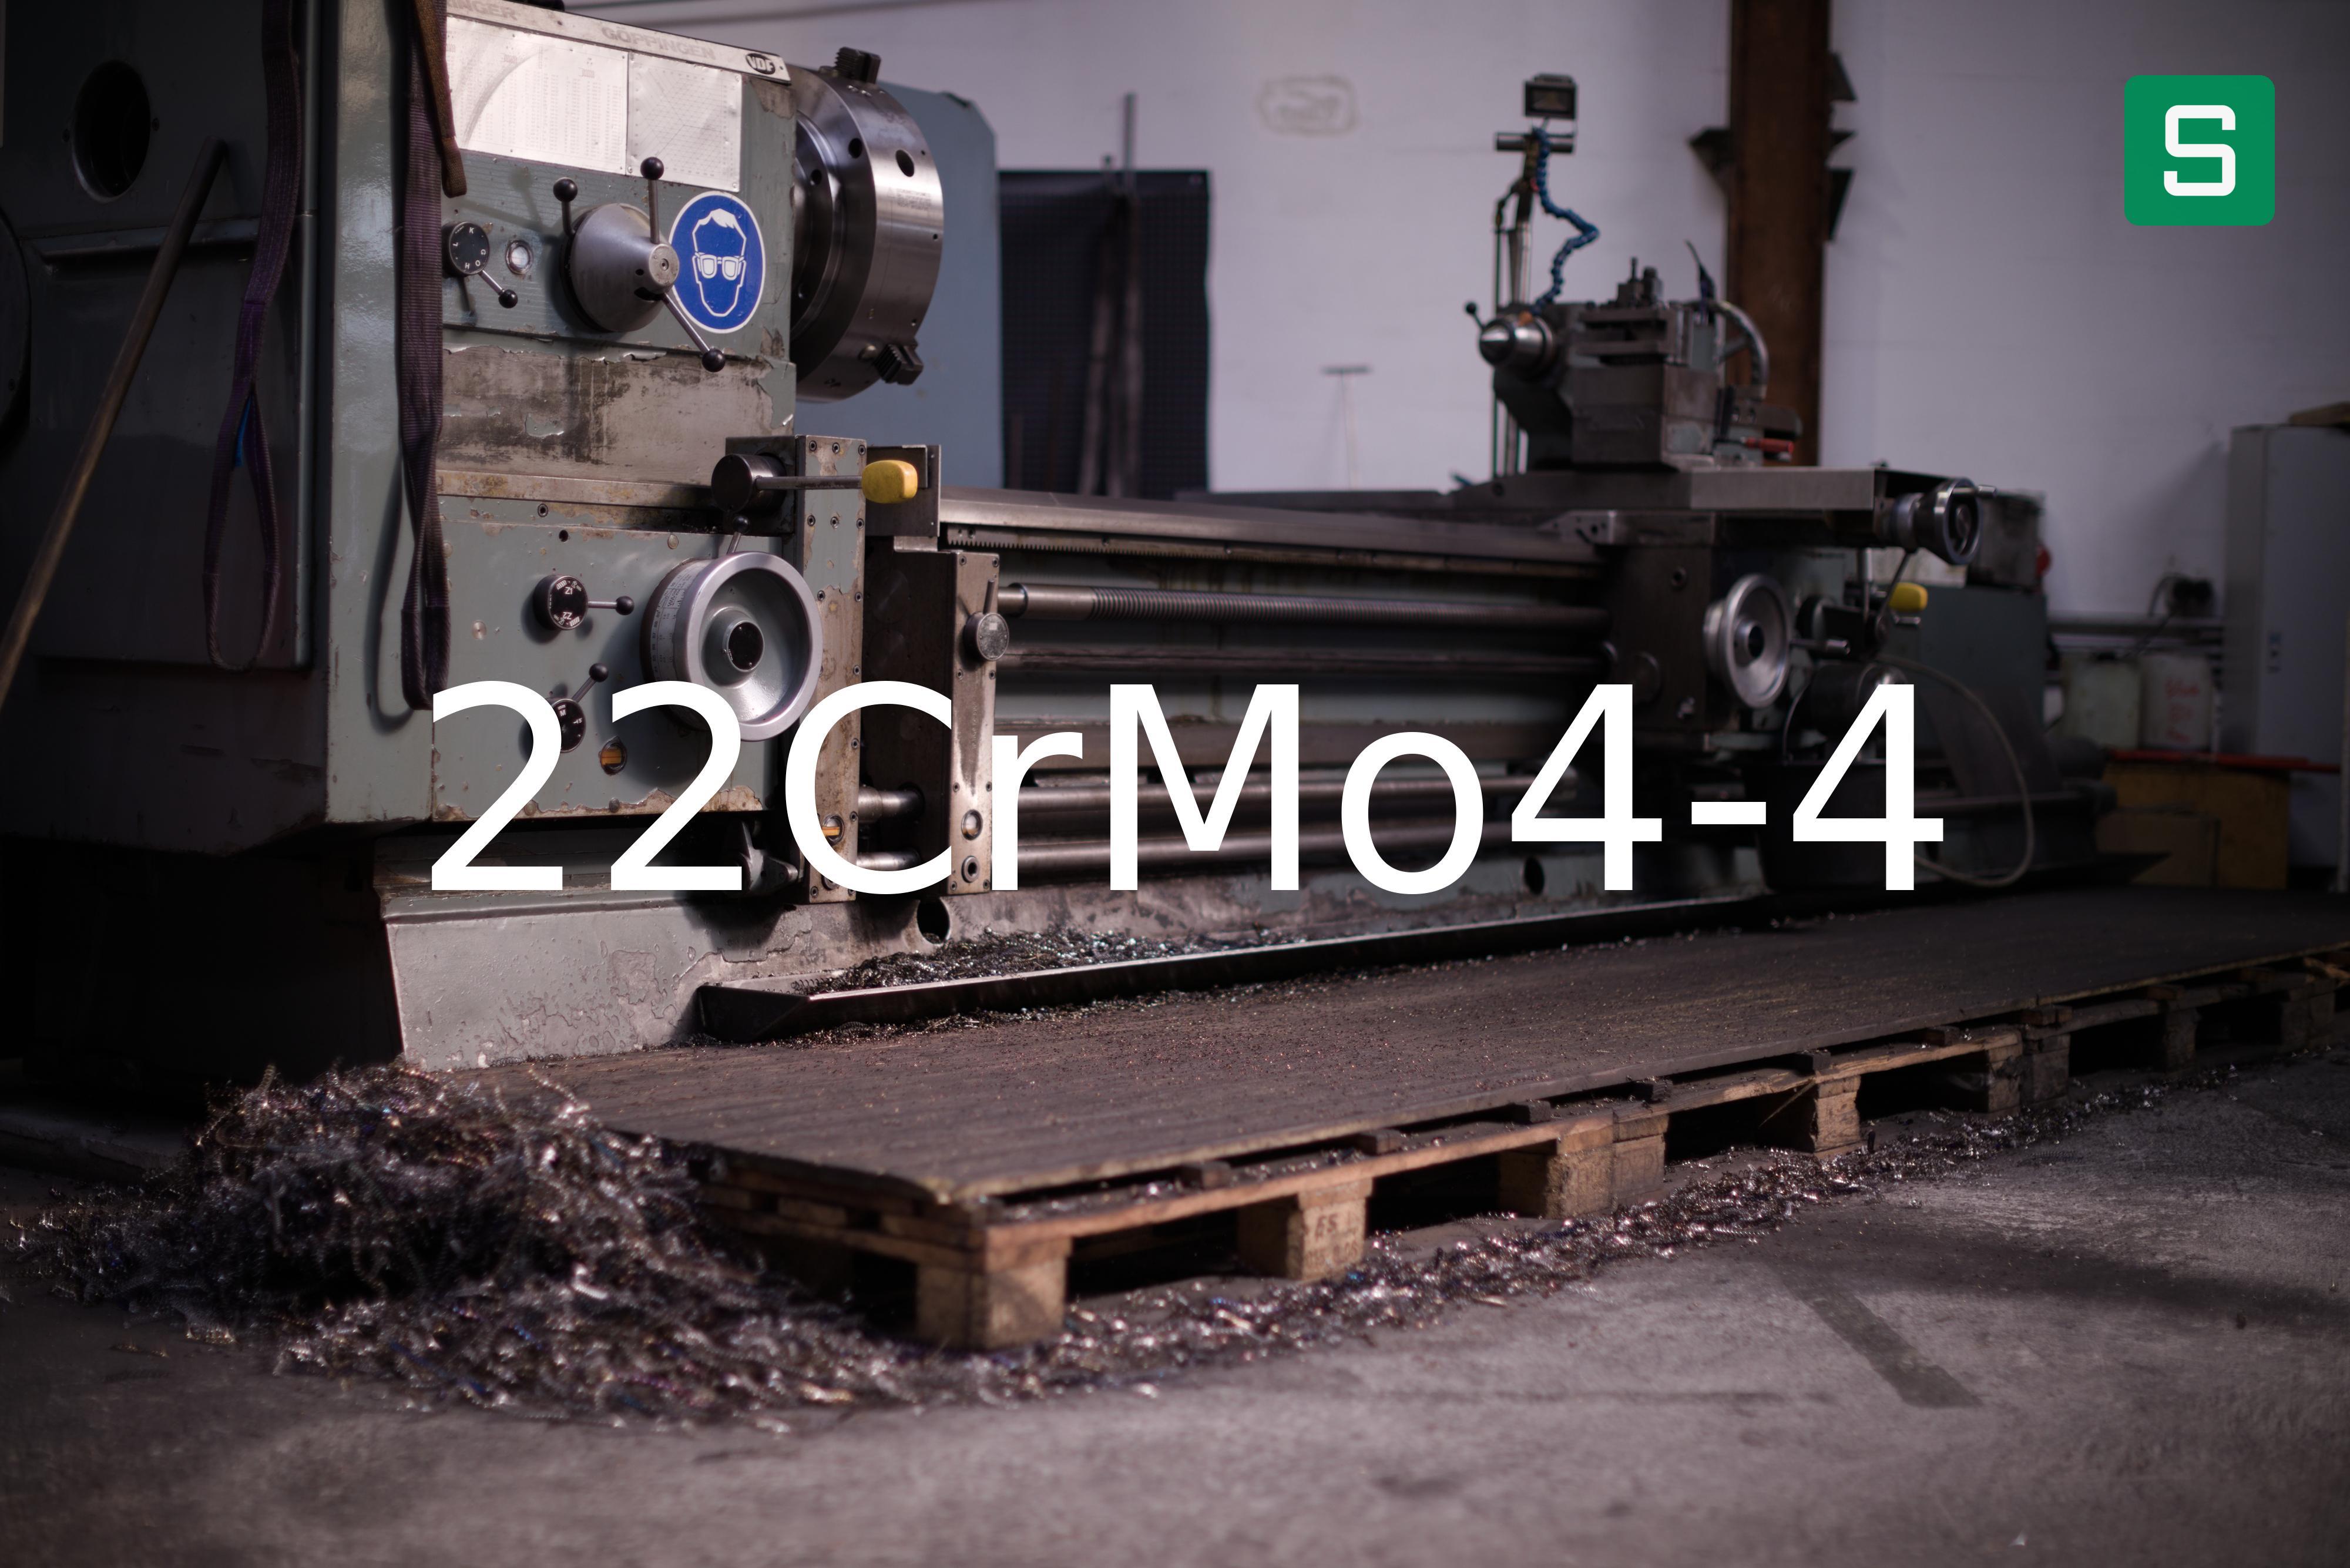 Steel Material: 22CrMo4-4